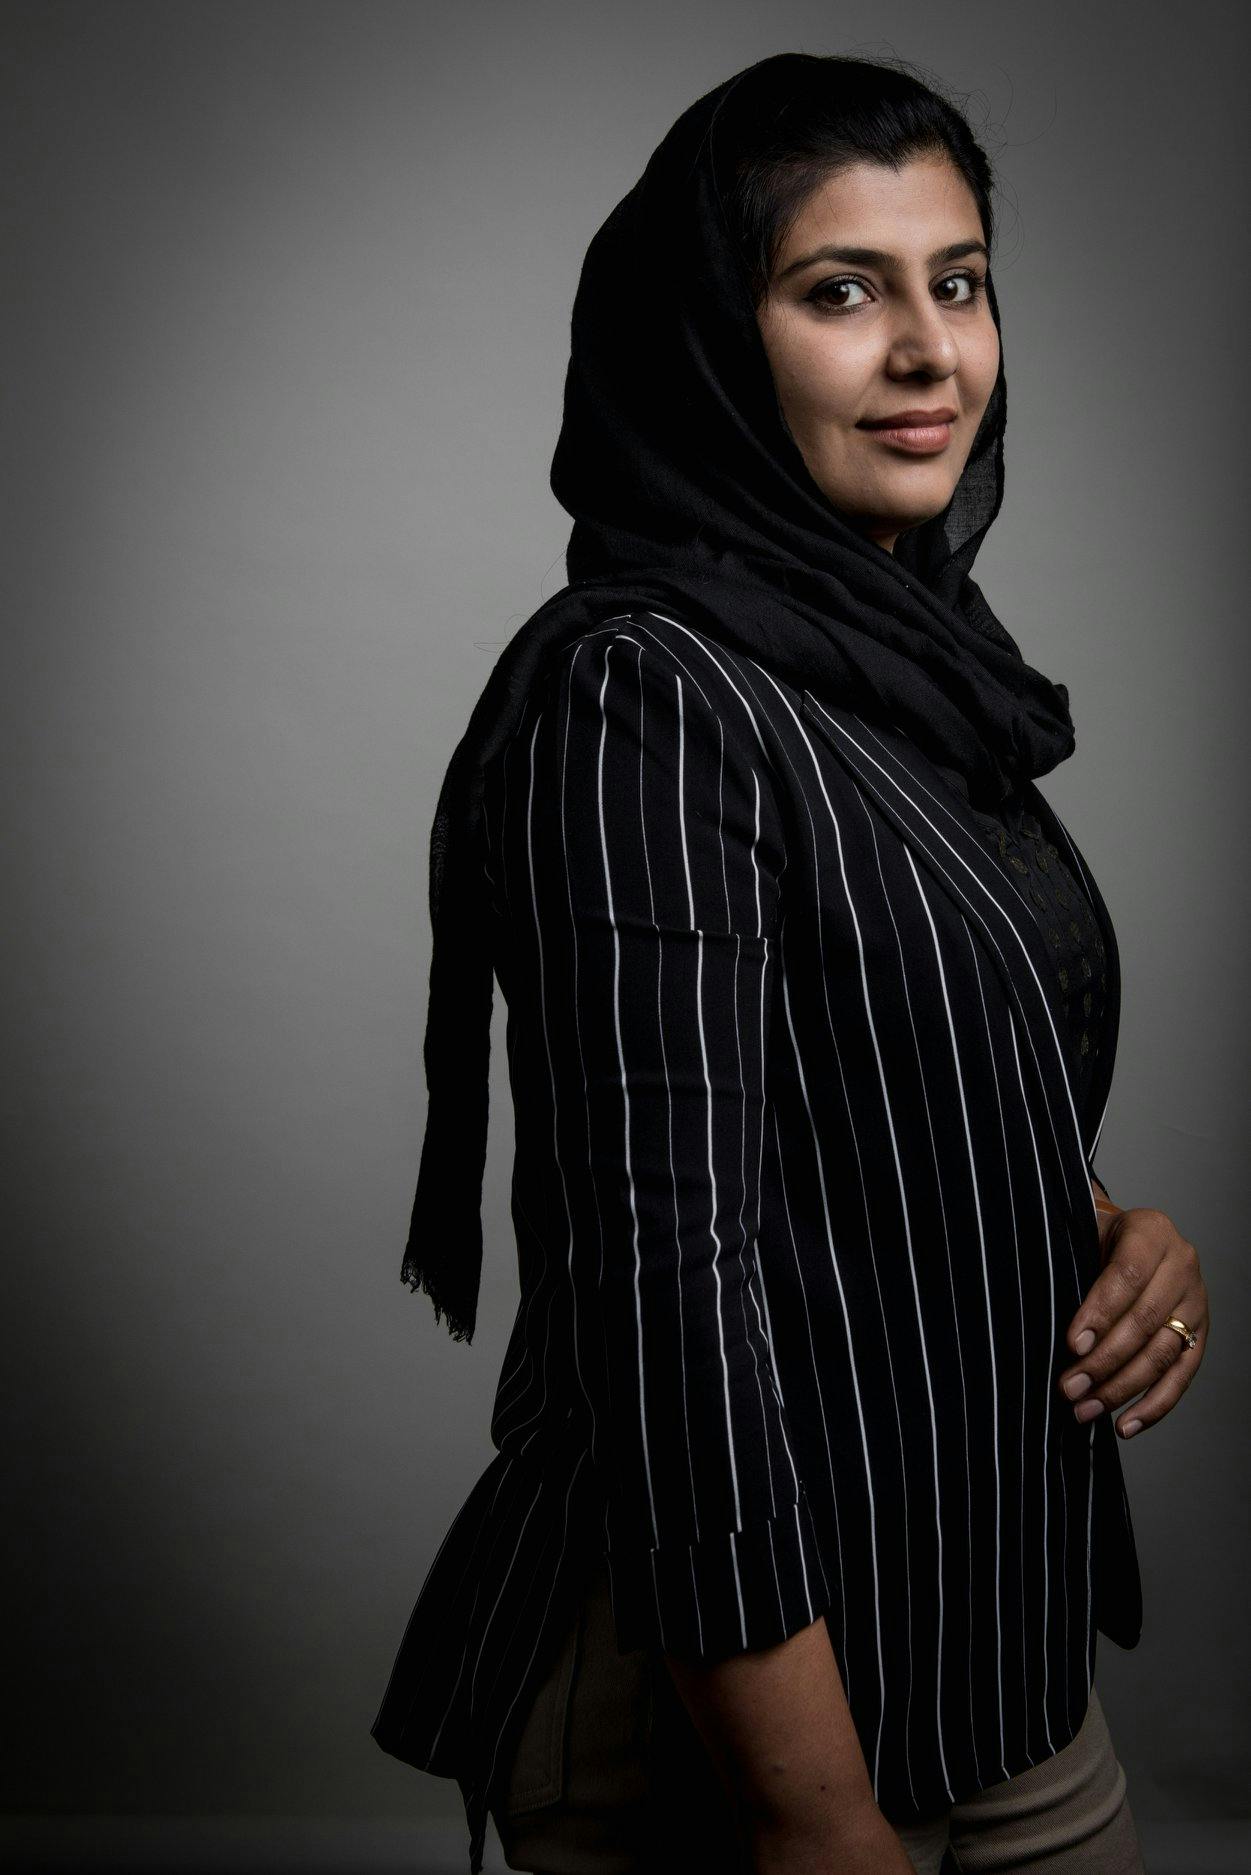 Rabia Ahmadi